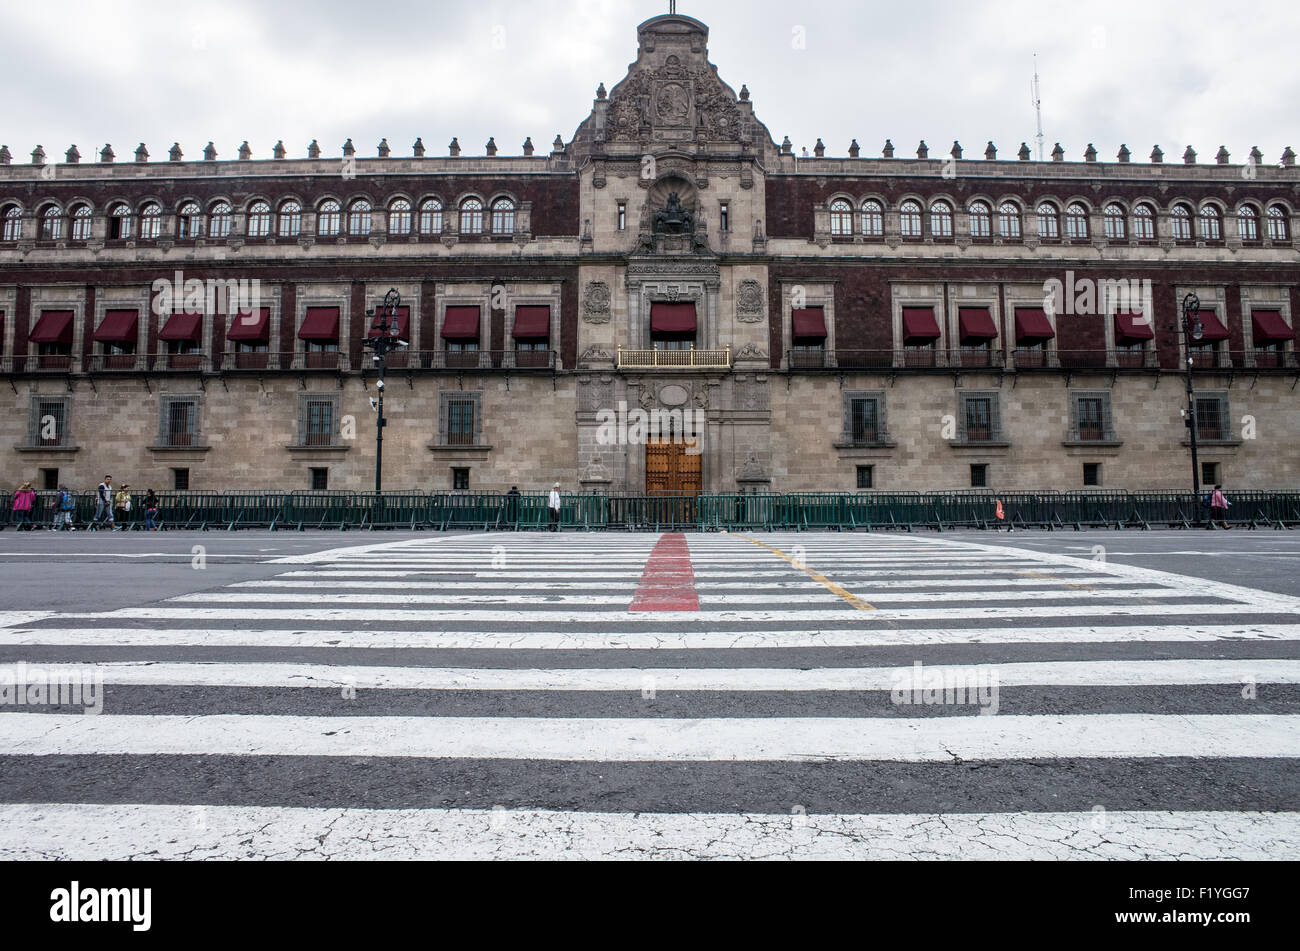 The Palacio Nacional (National Palace), the building housing the executive branch of the Mexican government. Formally known as Plaza de la Constitución, the Zocalo is the historic heart of Mexico City. Stock Photo